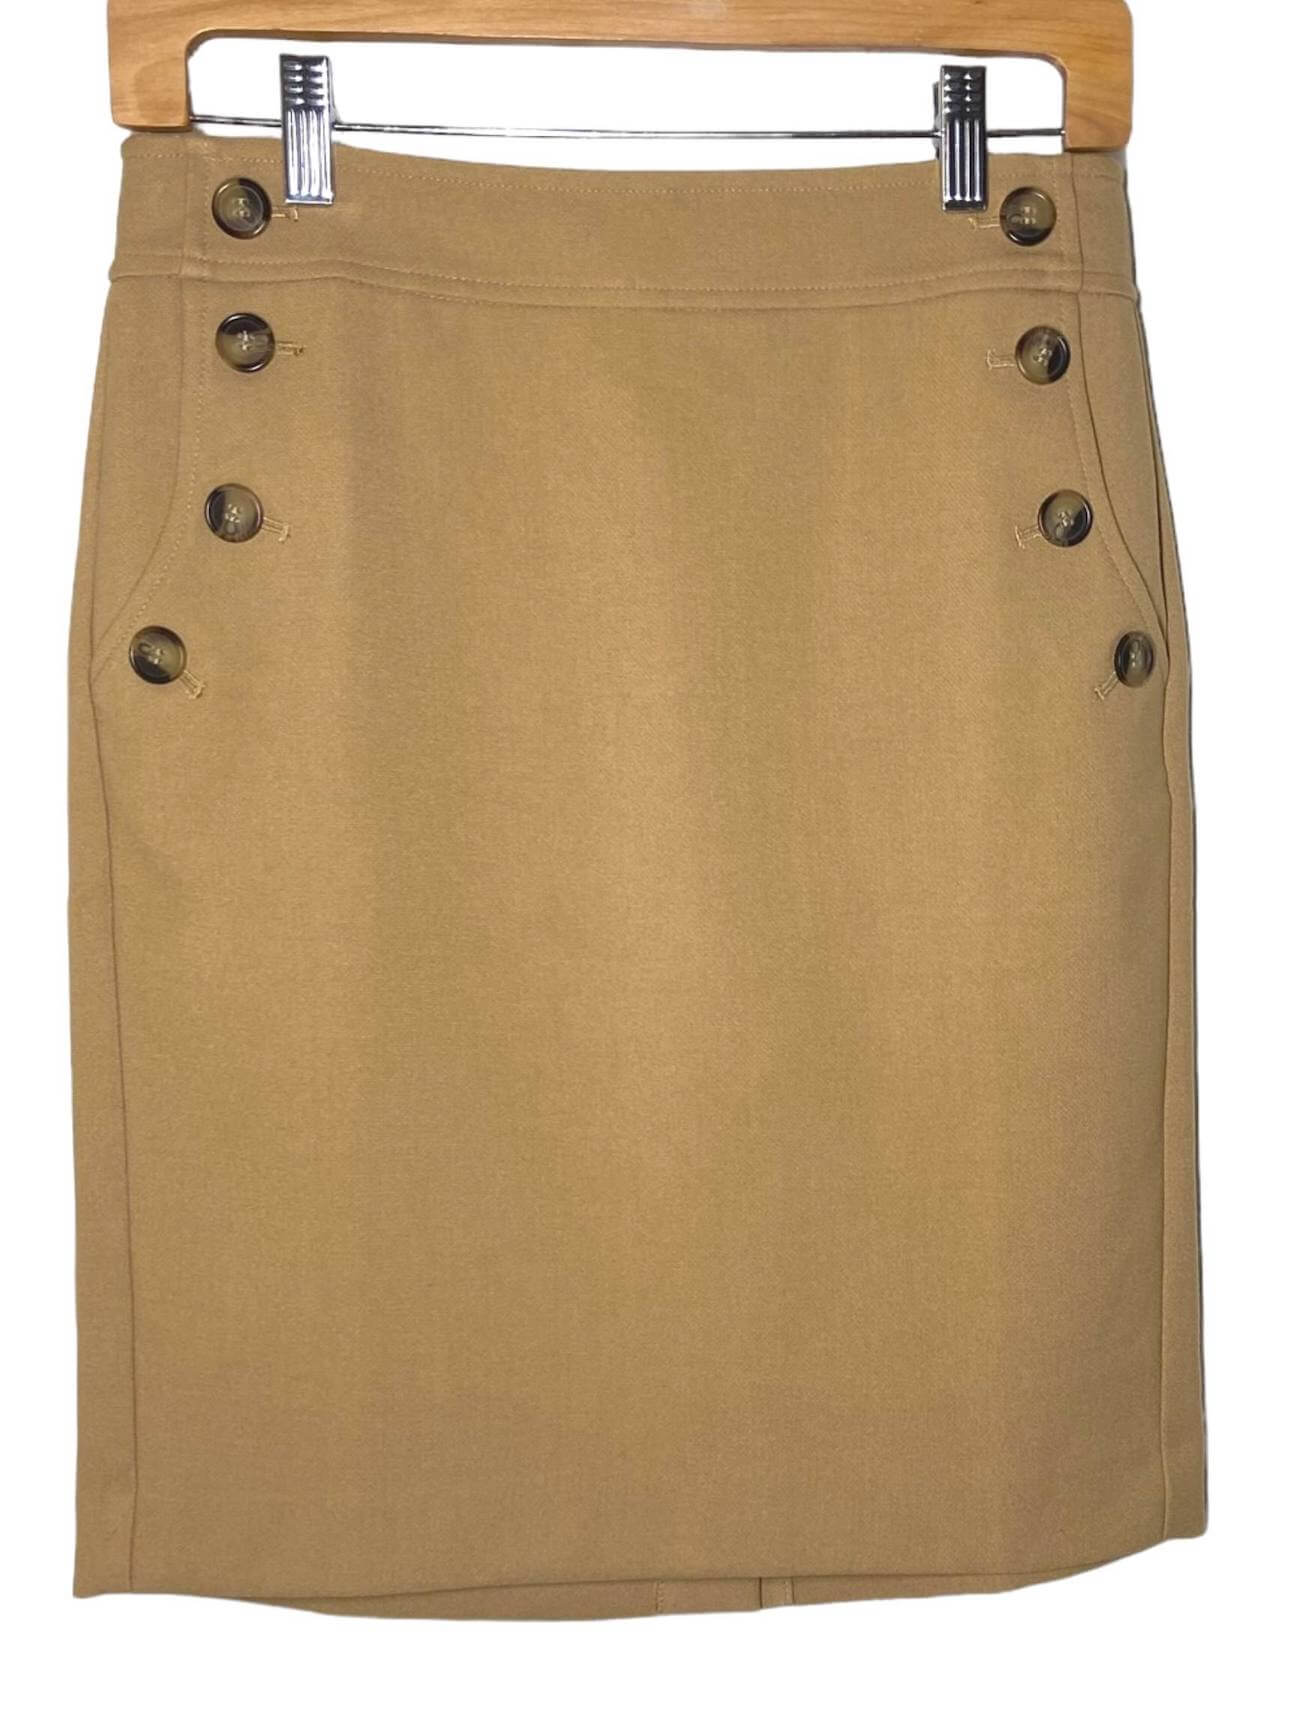 Warm Autumn ANN TAYLOR LOFT camel tan button pocket skirt